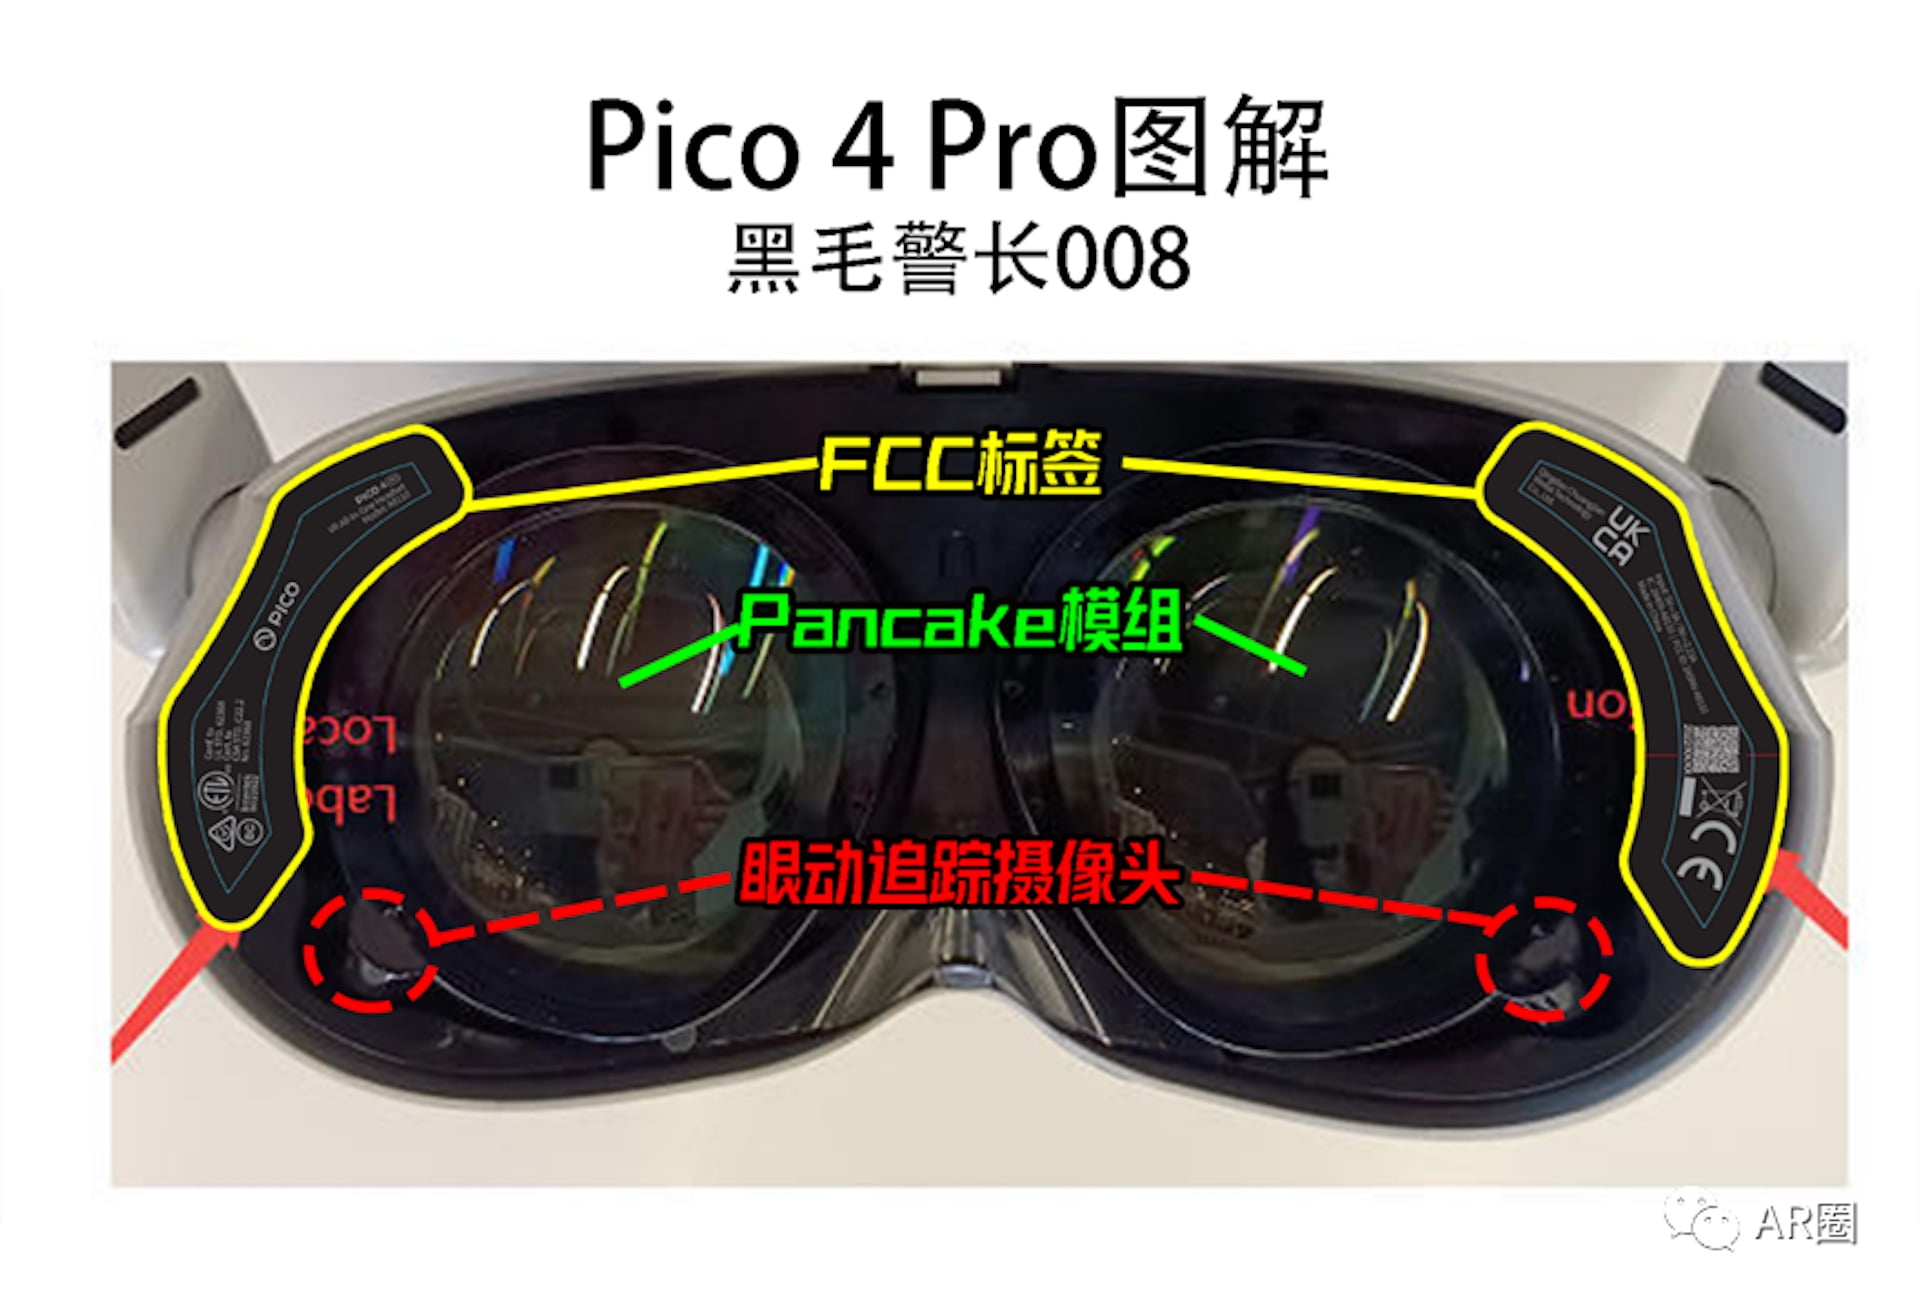 Pico Neo 4 (Pro): Launch im September, aggressive Bepreisung – Bericht